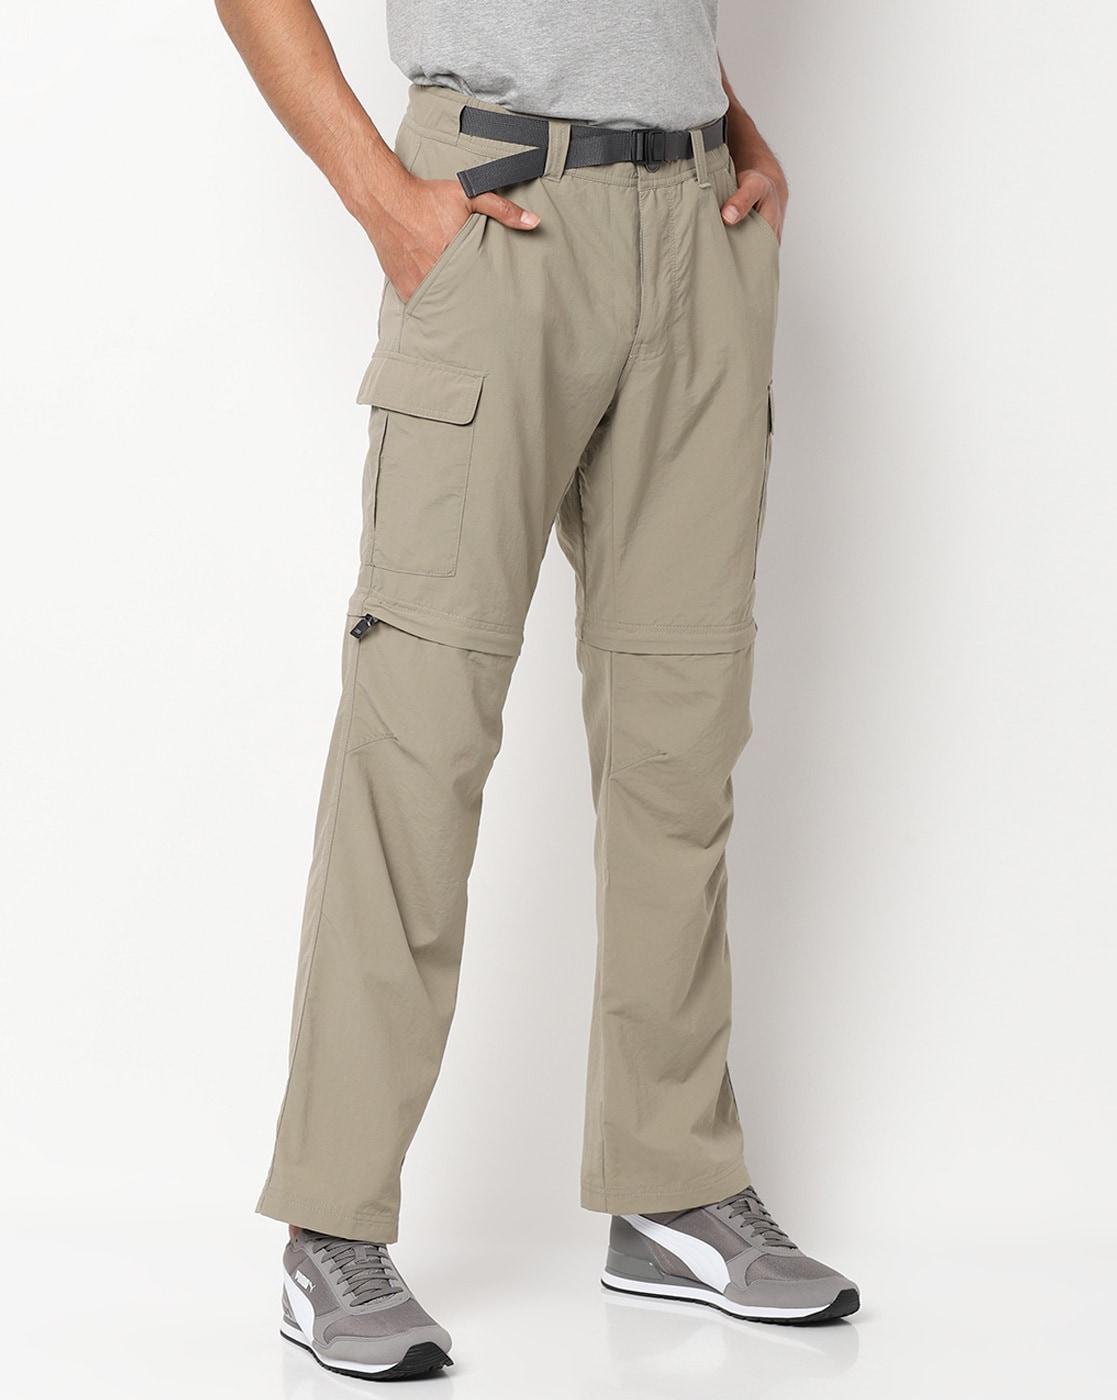 Buy Columbia Grill Regular Fit Convertible Pants for Men Online  Tata CLiQ  Luxury